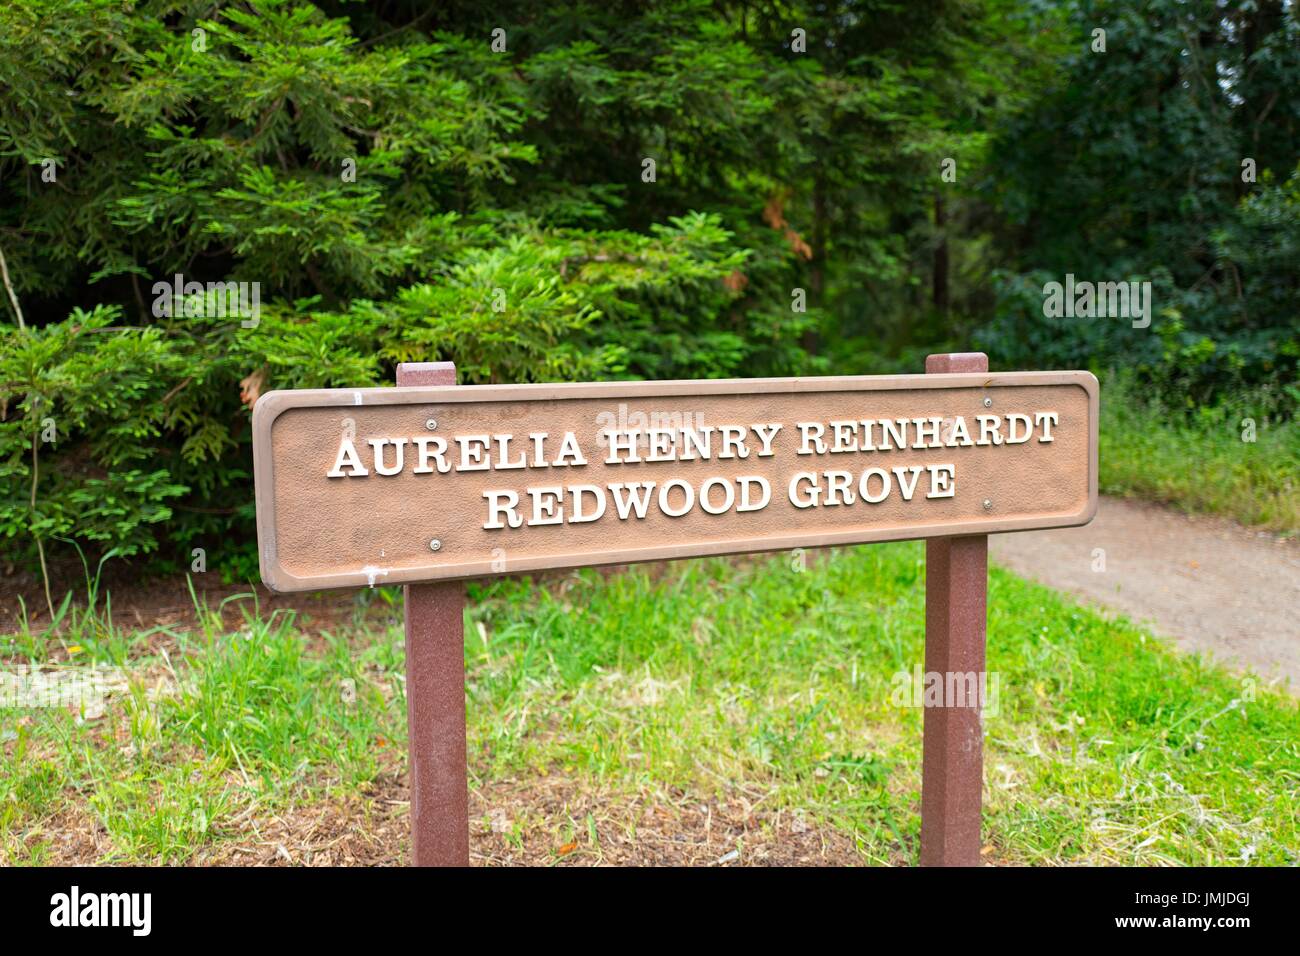 Segnaletica per Aurelia Henry Reinhardt Redwood Grove in Redwoods Parco Regionale di Oakland, California, 26 maggio 2017. Foto Stock